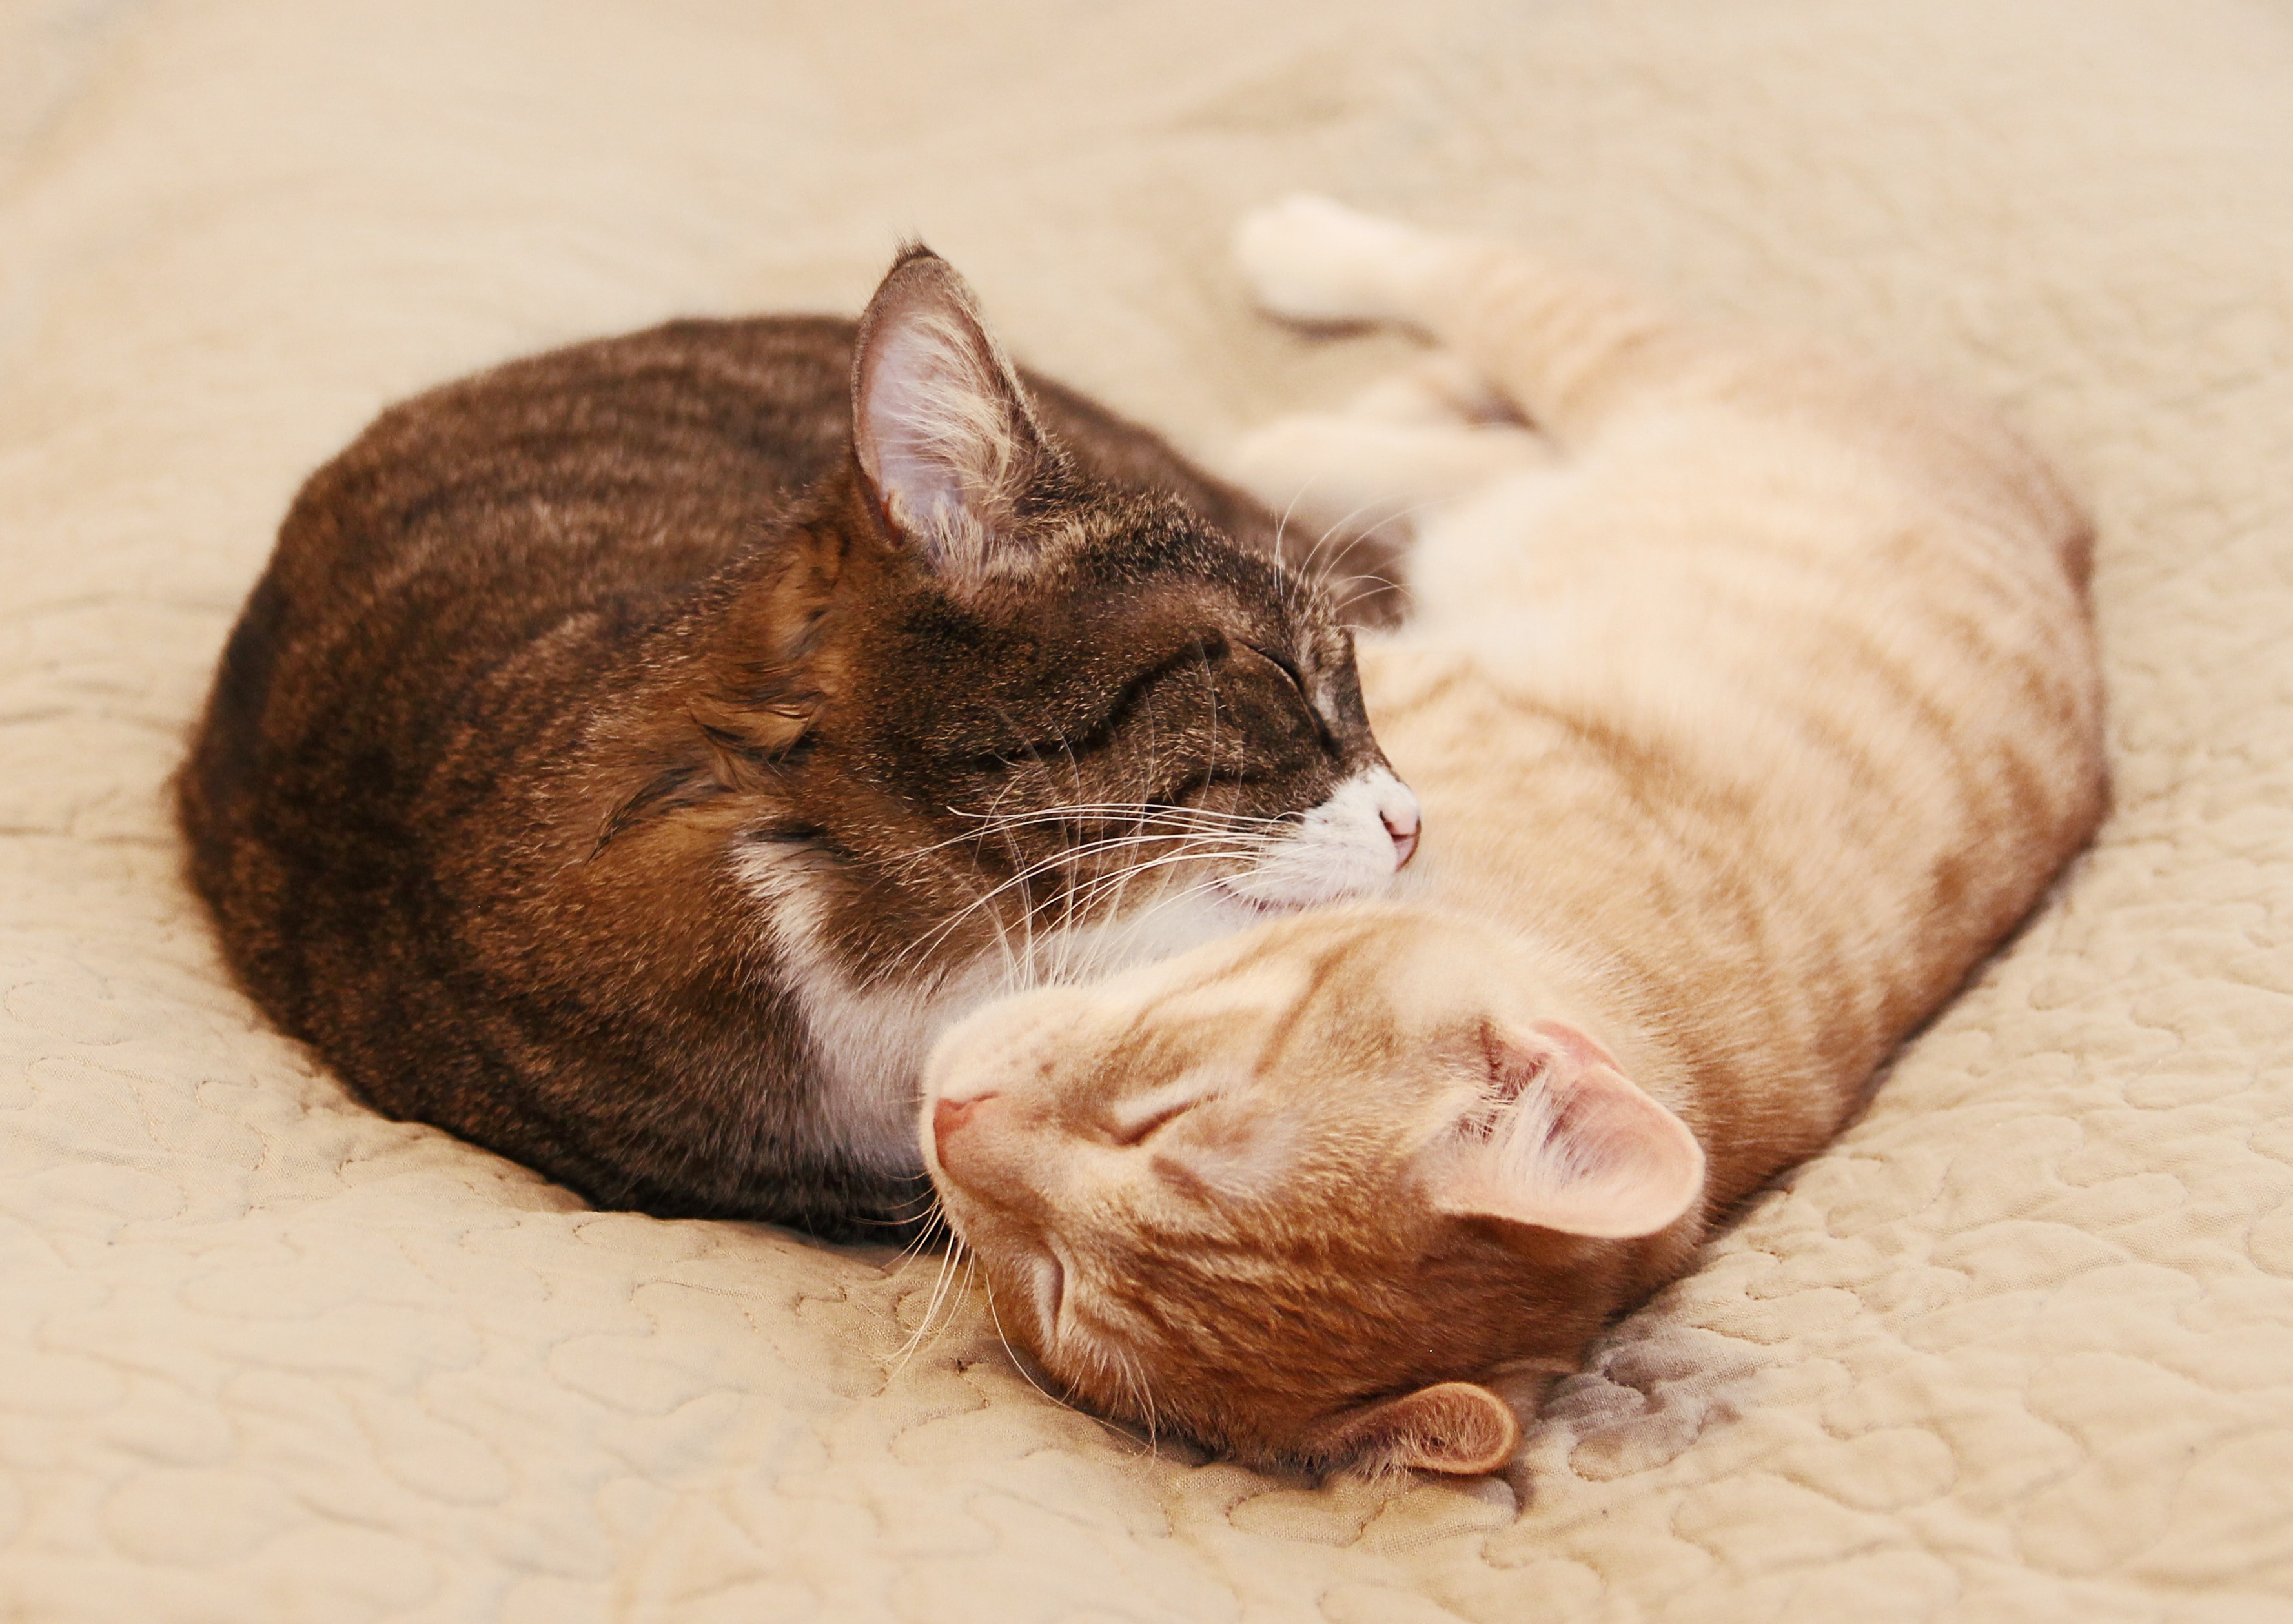 Snuggle cats